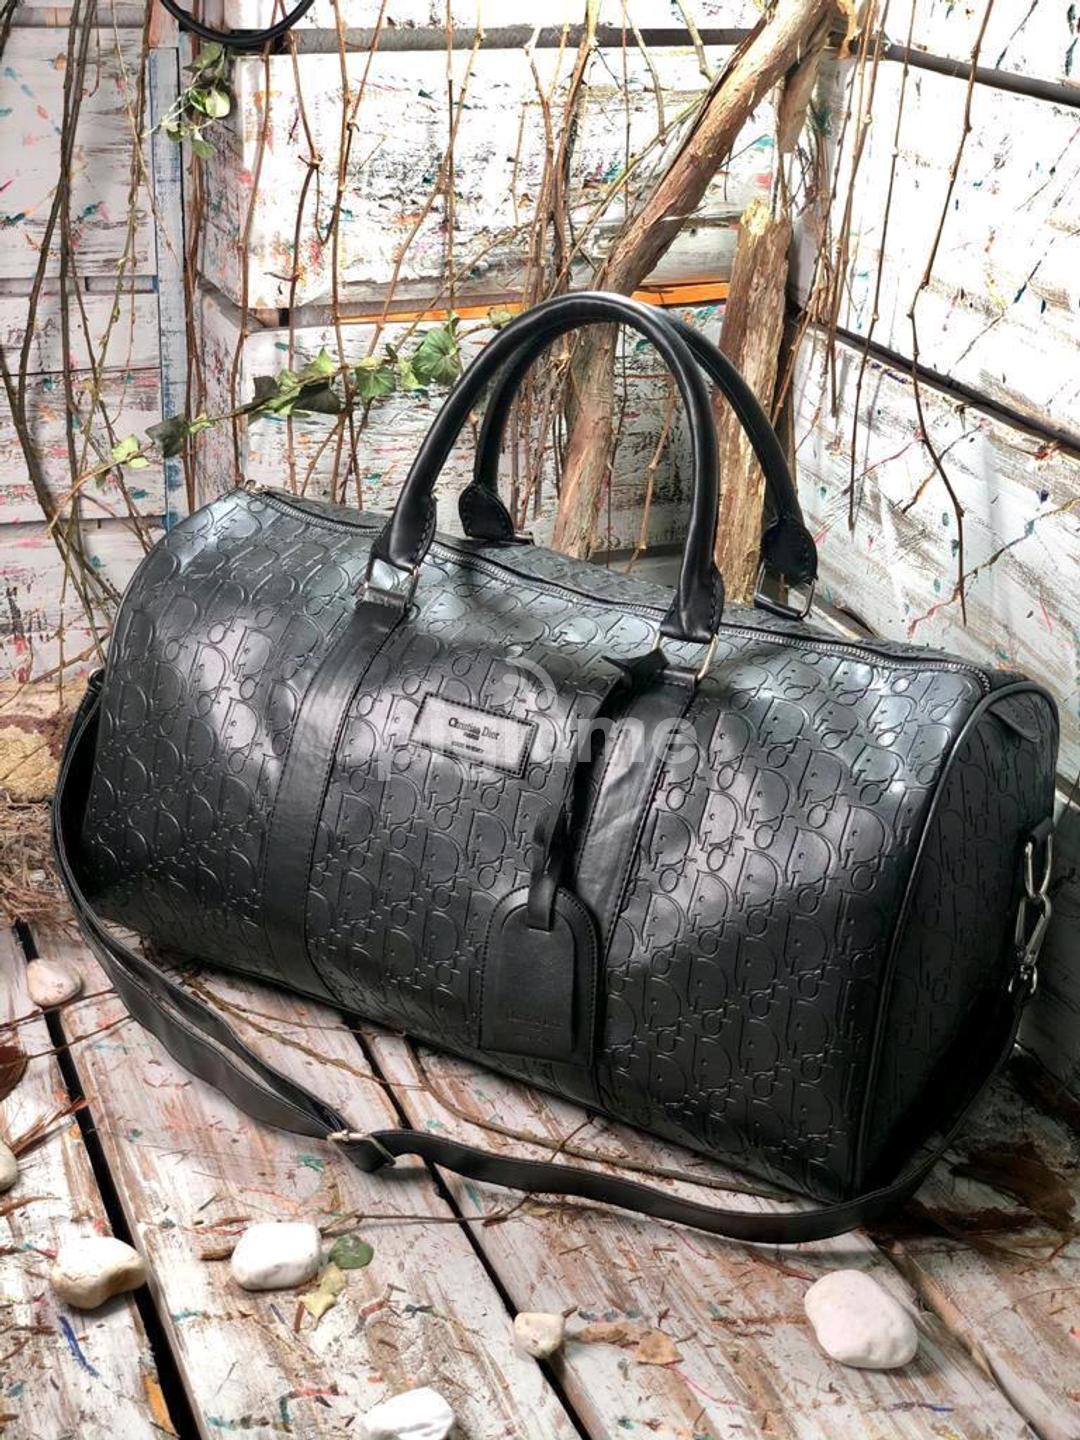 Quality Unisex Designer Daffle Duffle Travel Money Bags* in Nairobi CBD